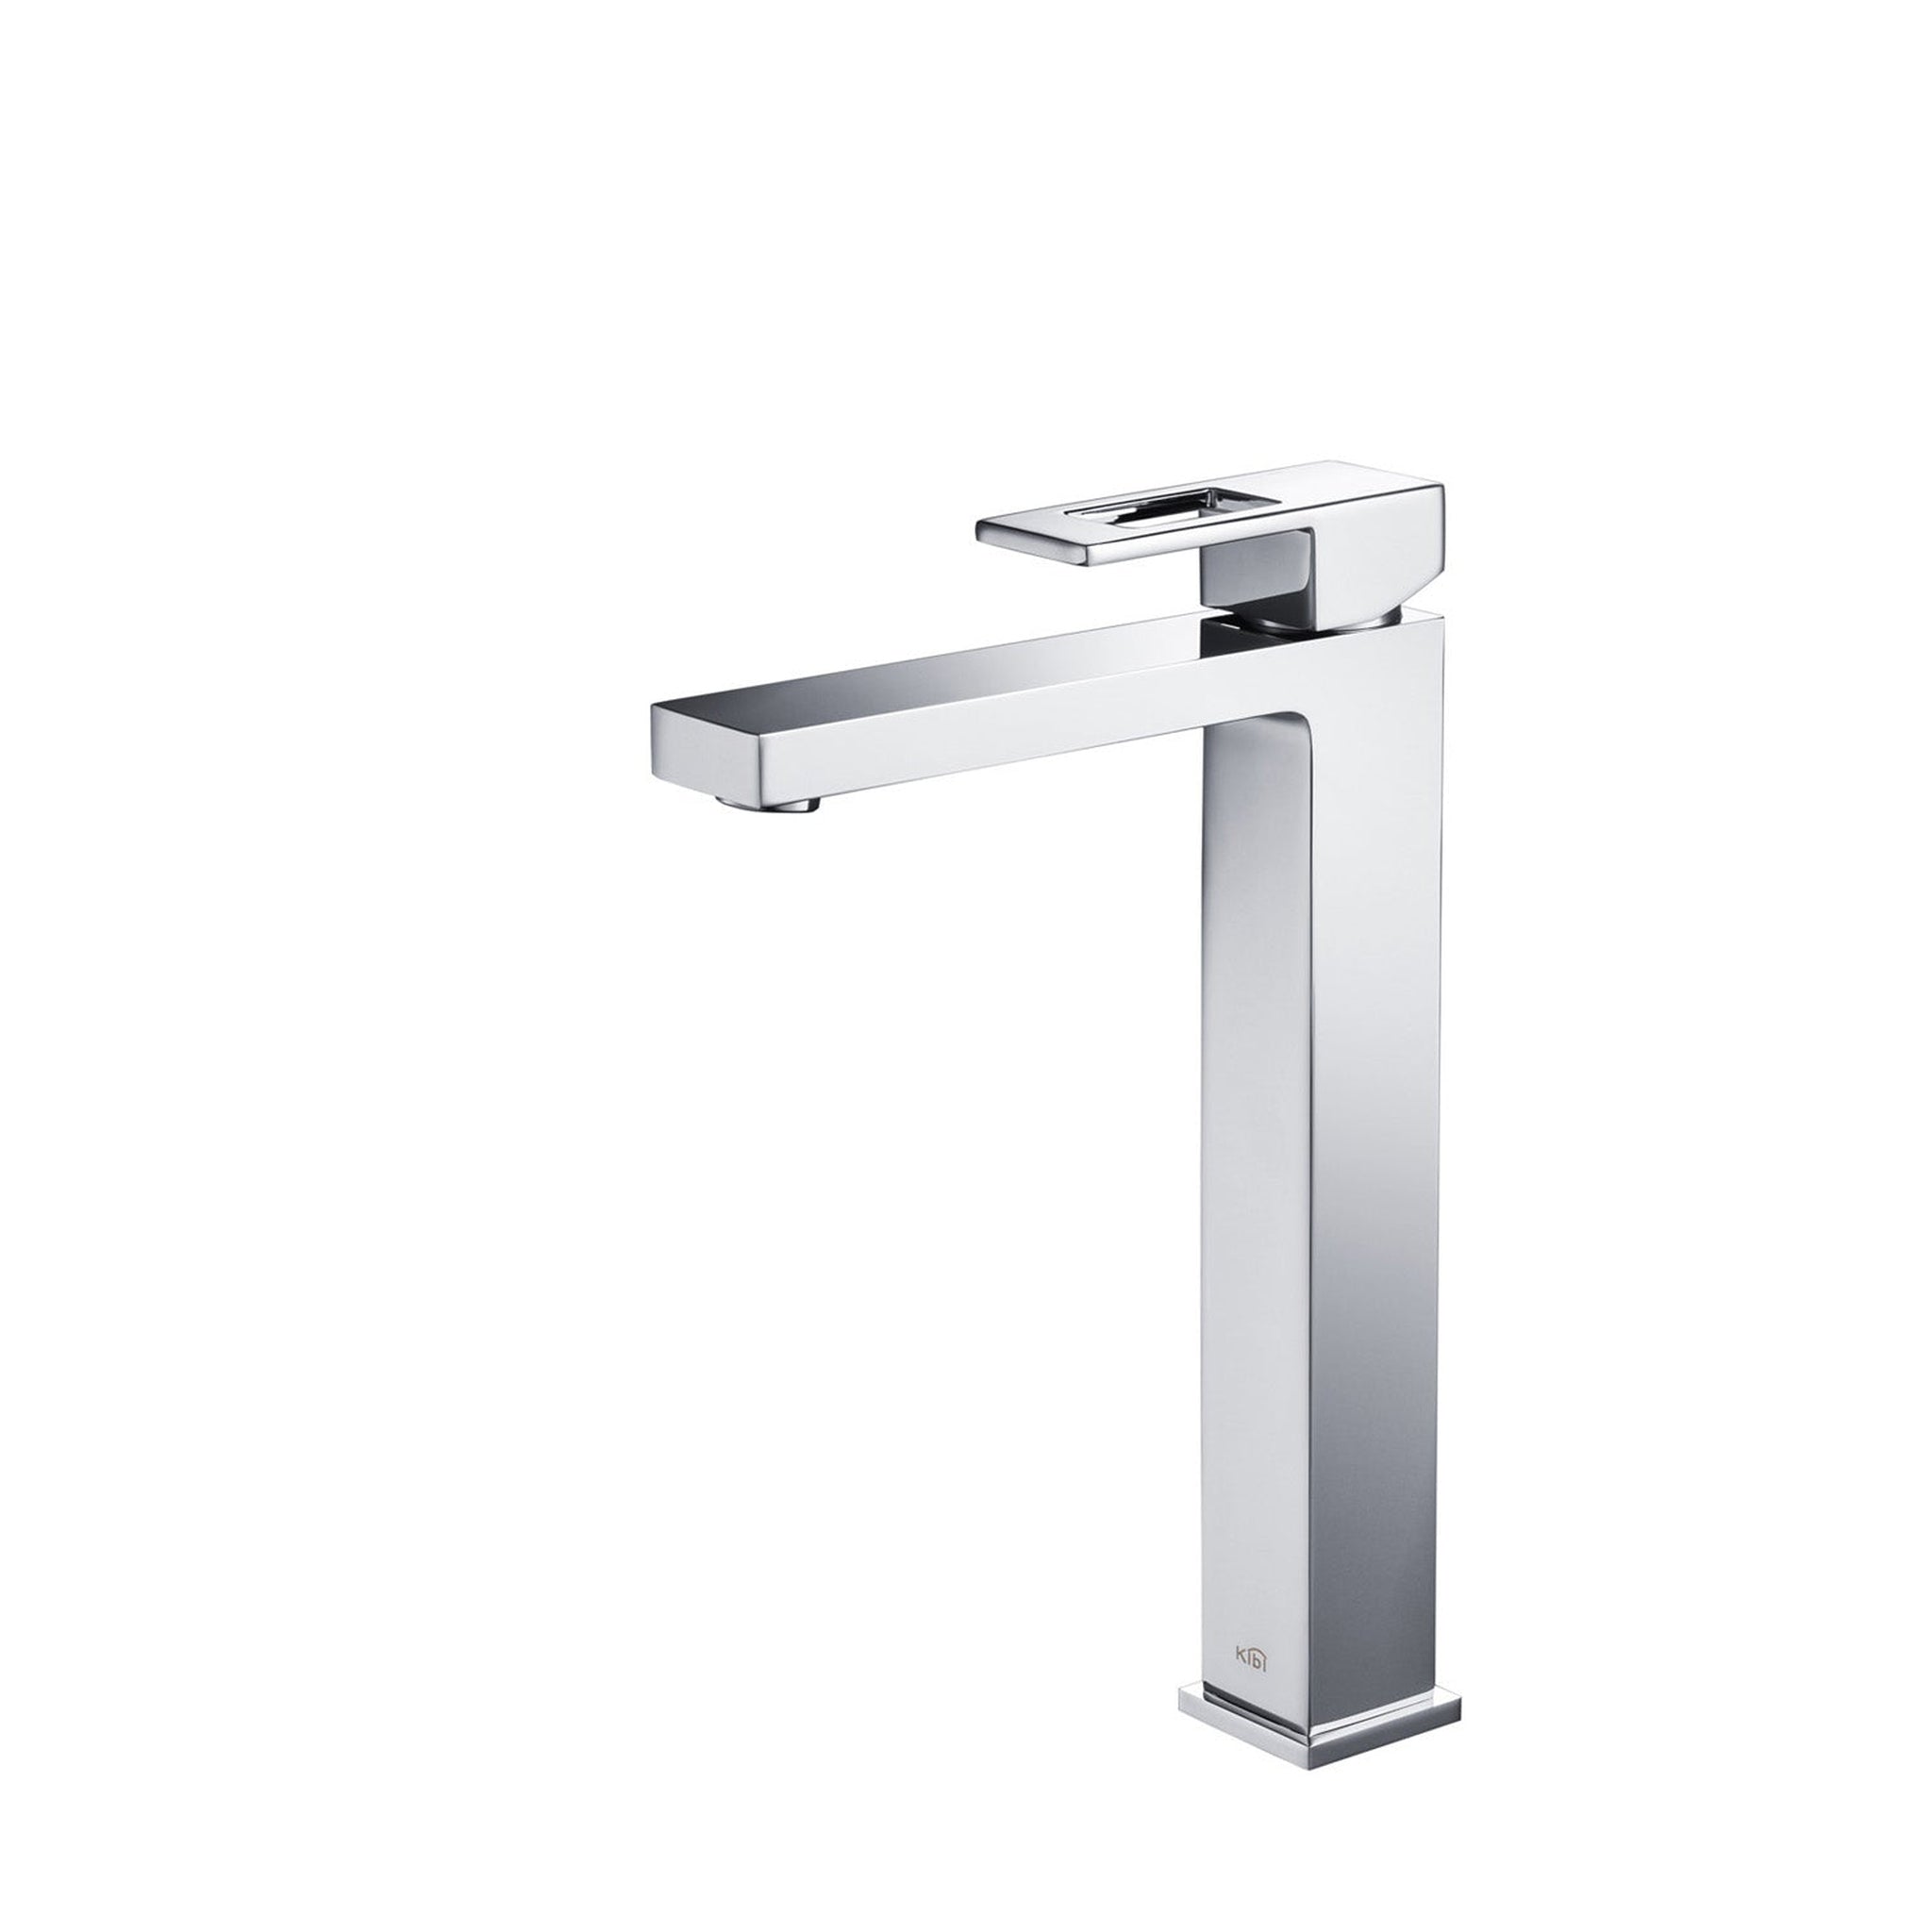 KIBI, KIBI Cubic Single Handle Chrome Solid Brass Bathroom Vessel Sink Faucet